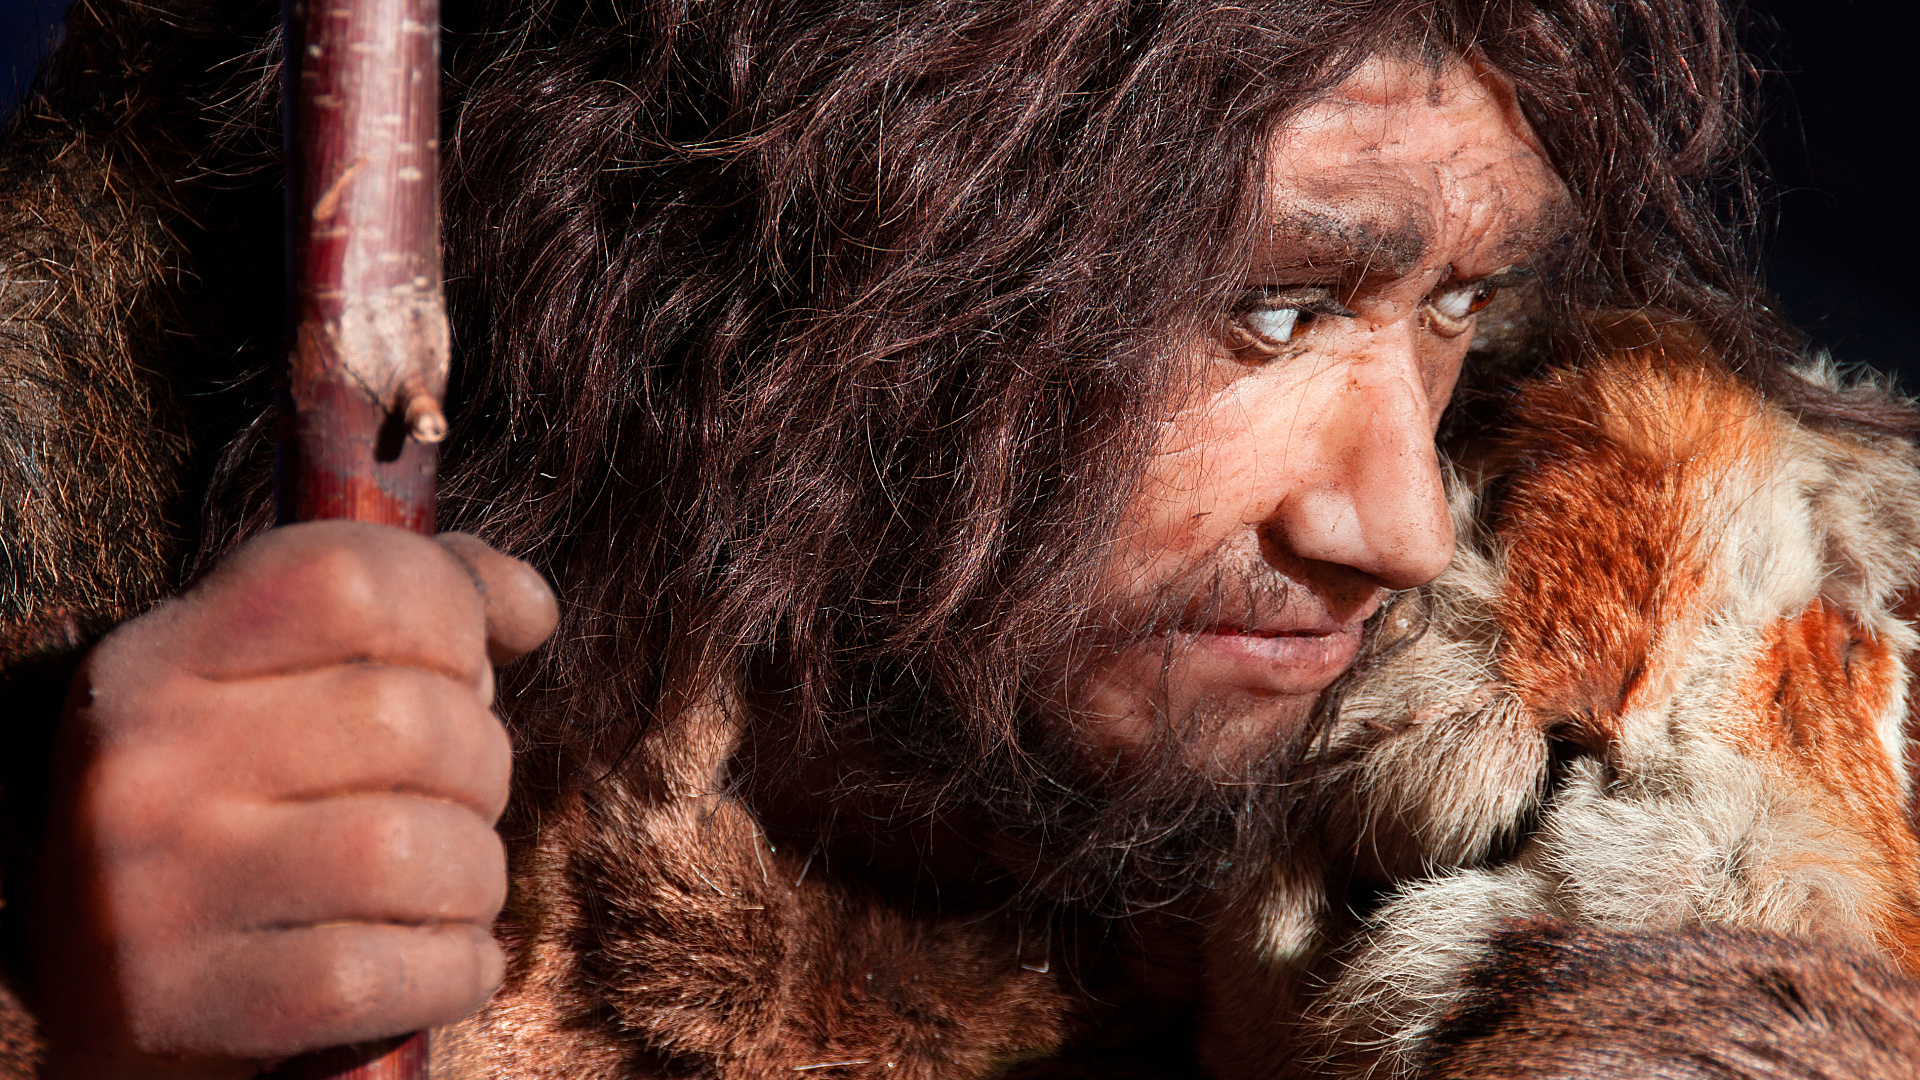 Neanderthal language - the spectrum of science